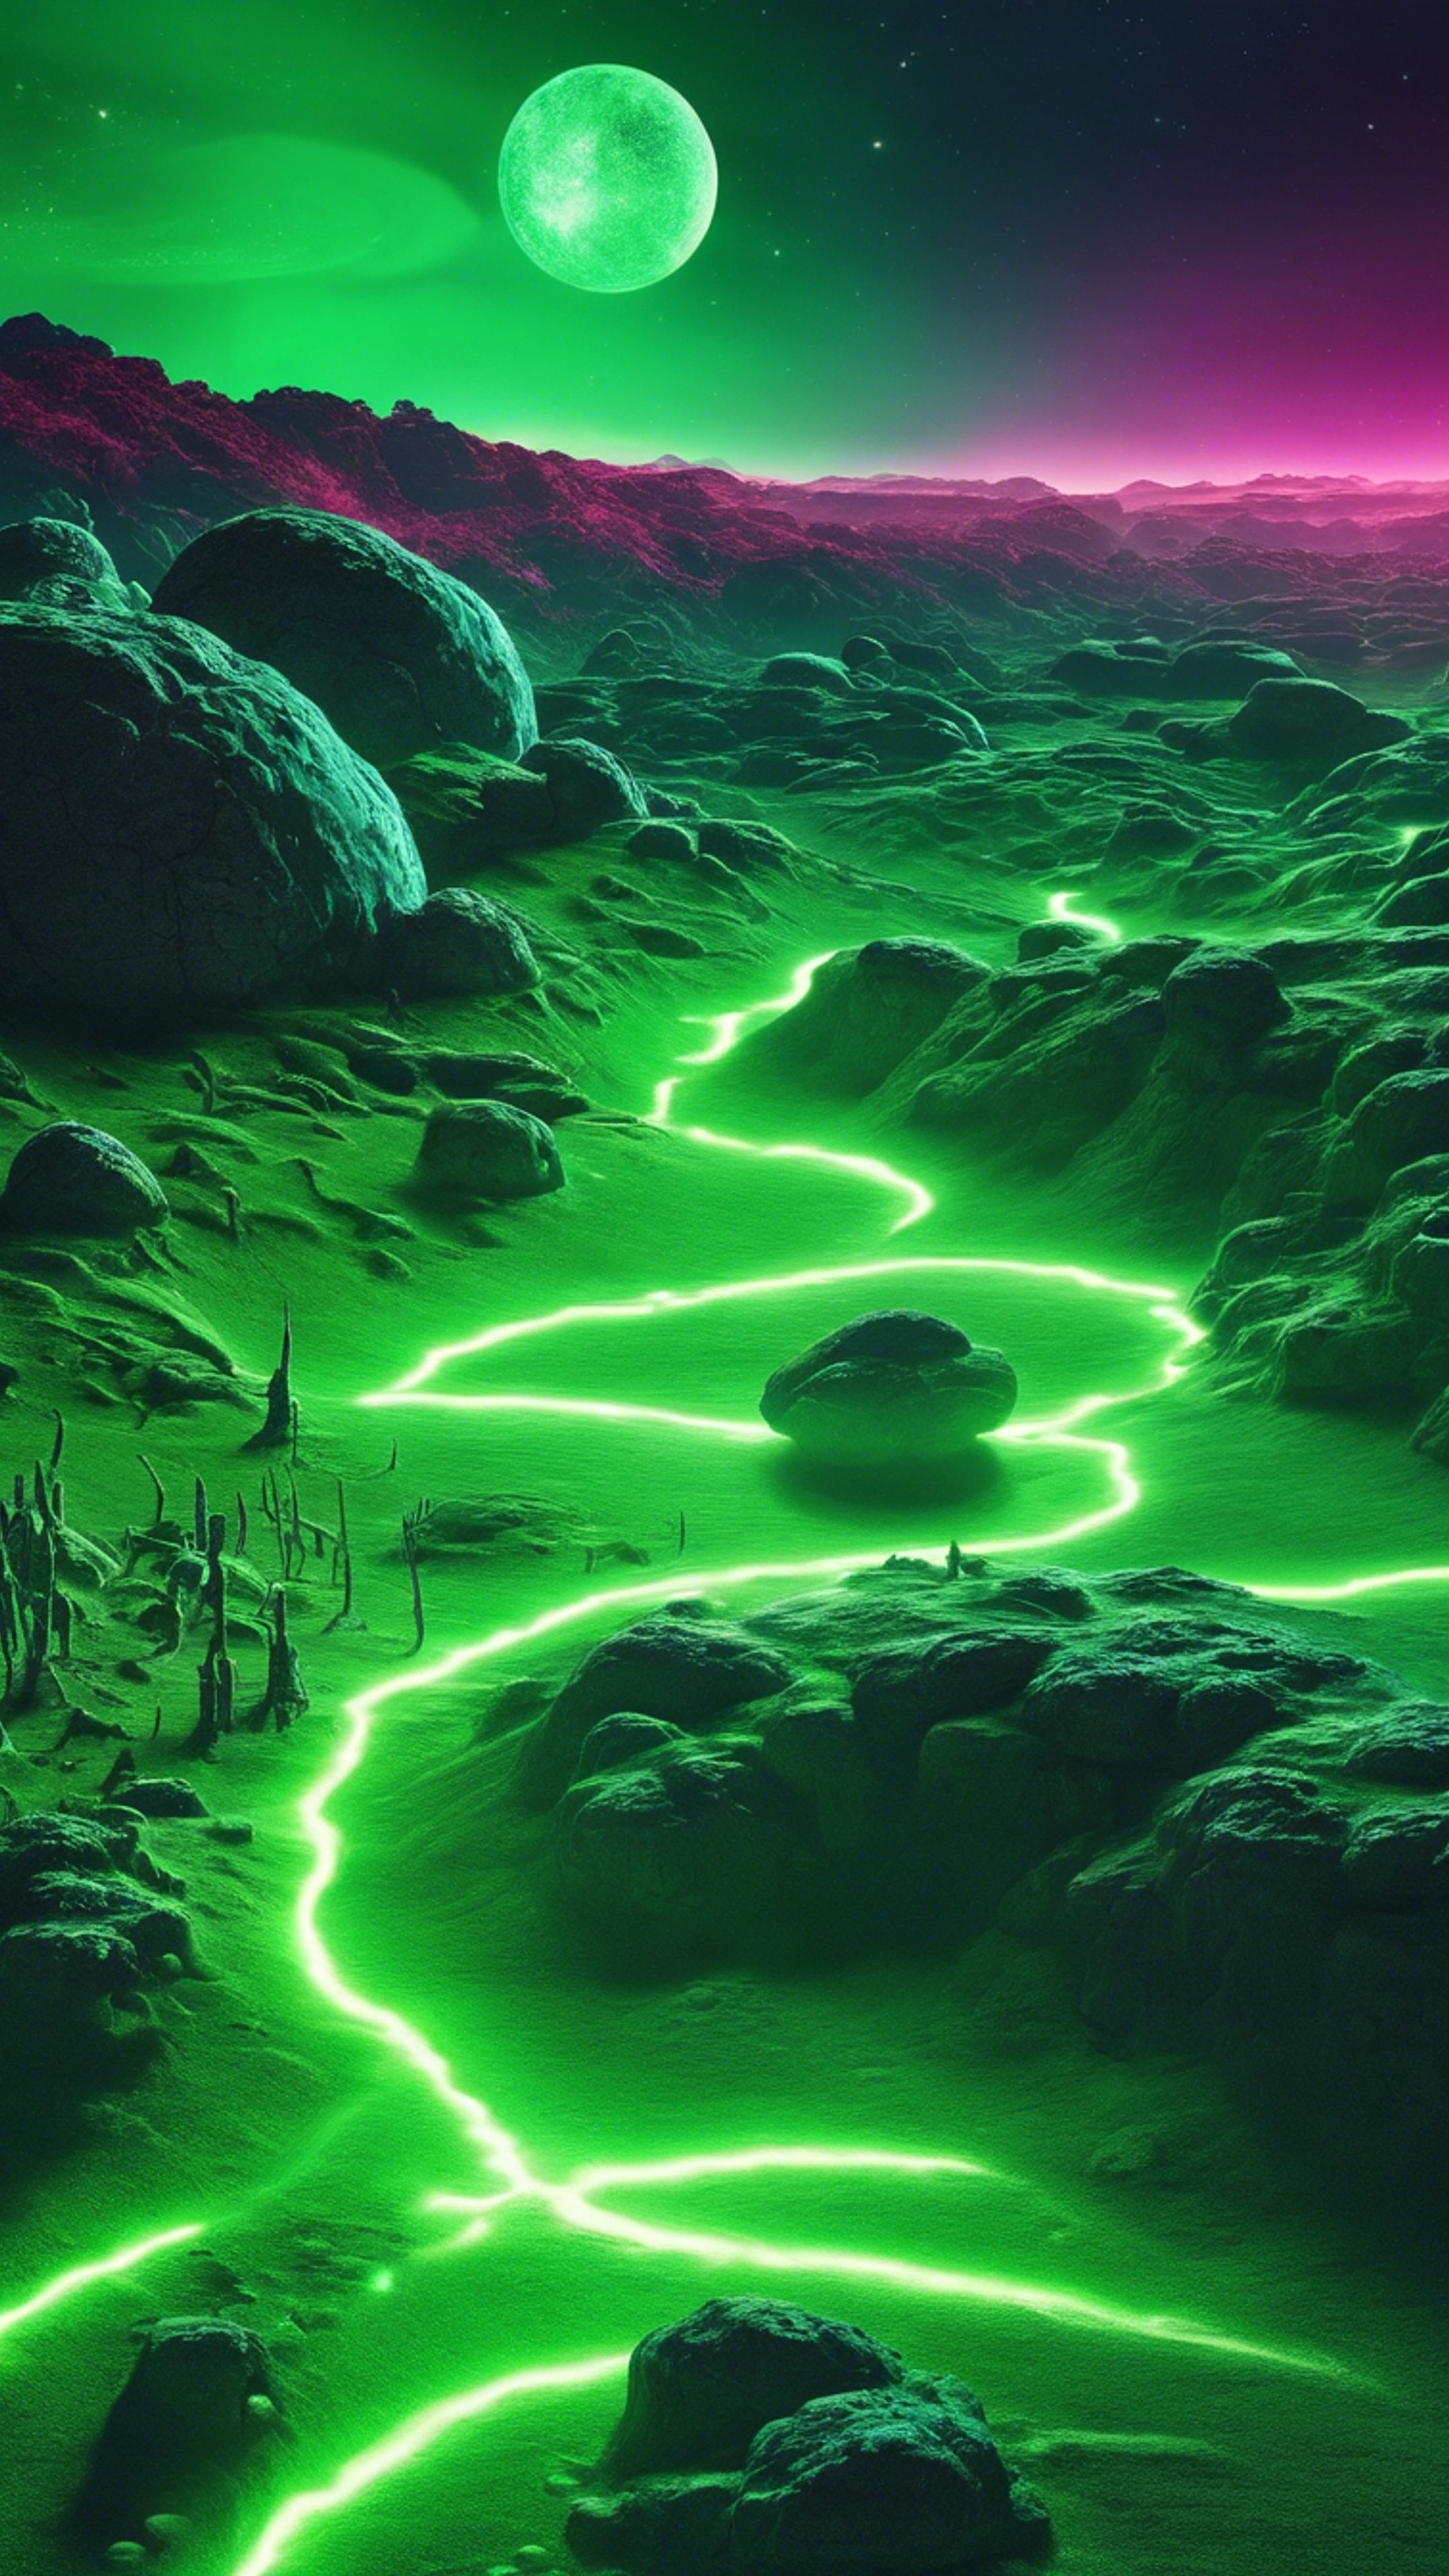 An alien planet landscape illuminated with cool neon green light. Tapet[c1d7fd56055c47ca89e3]